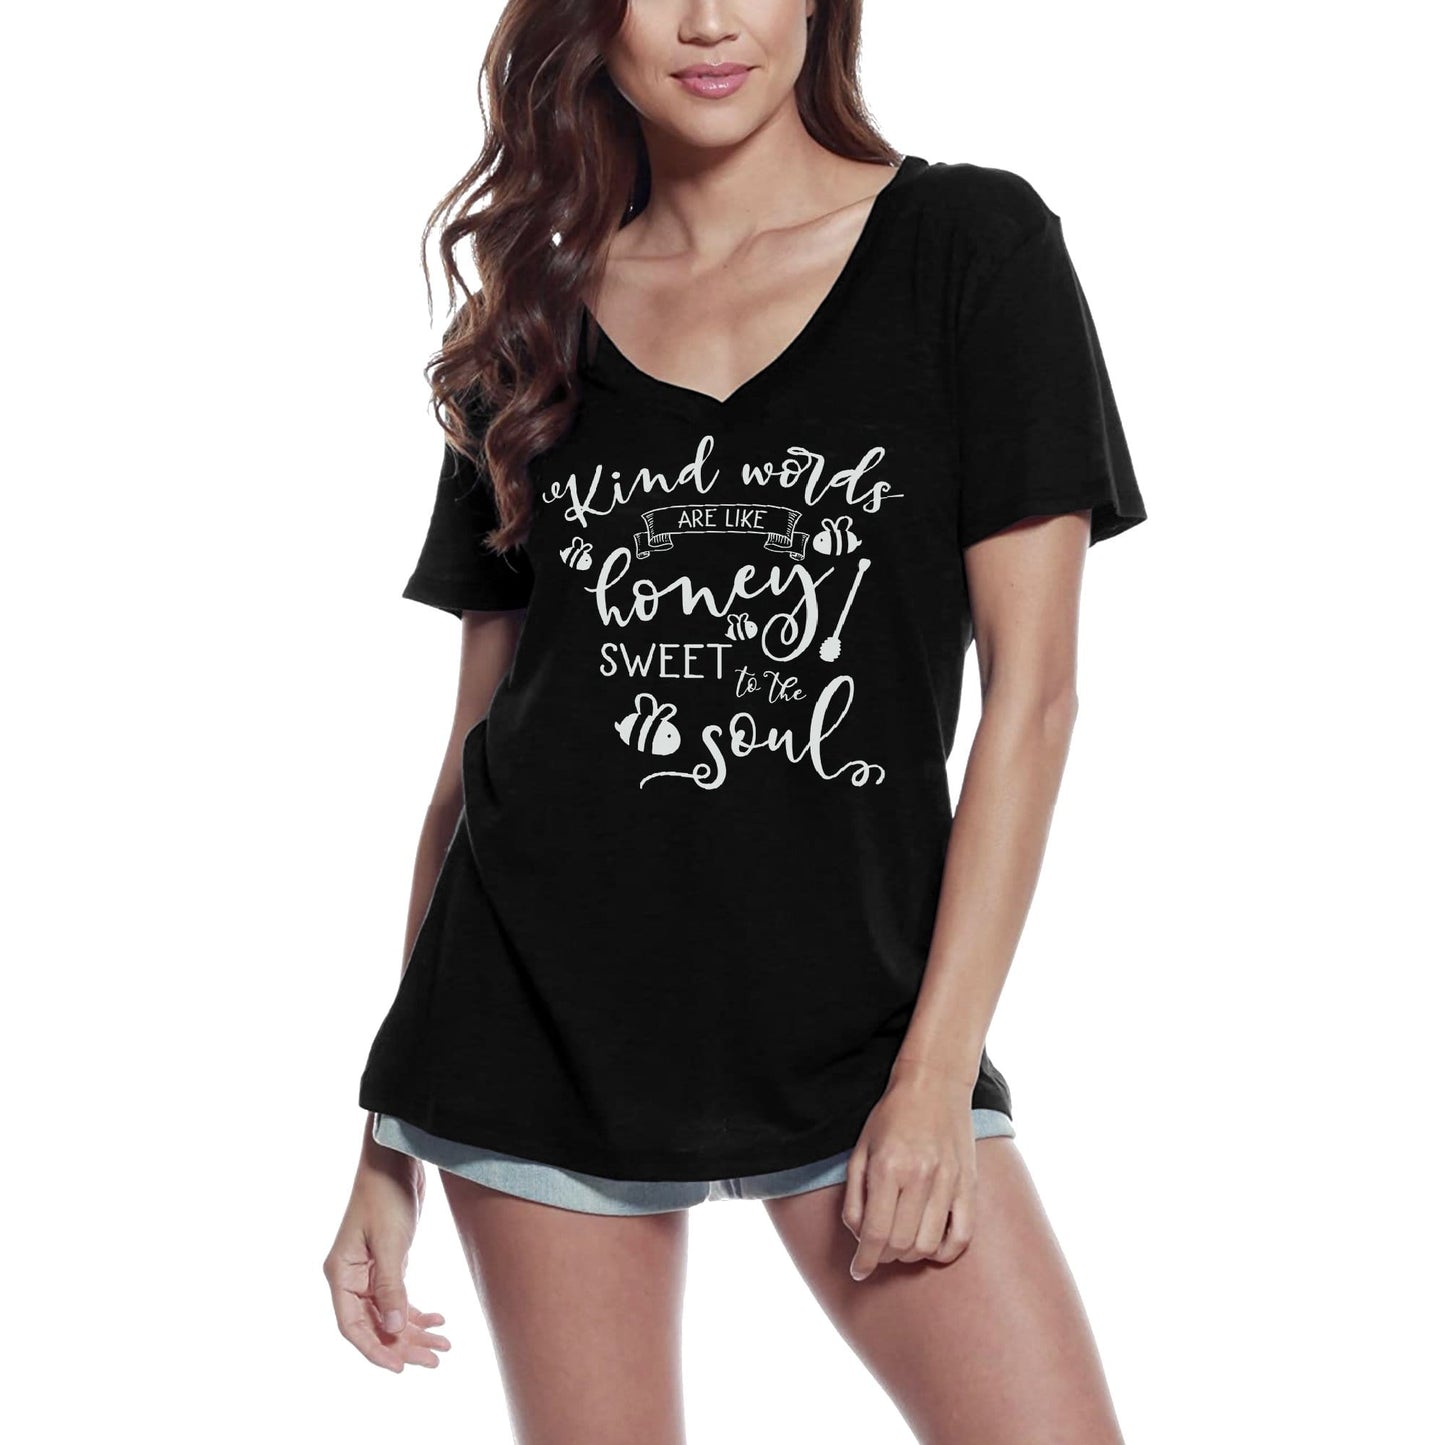 ULTRABASIC Women's T-Shirt Kind Words are Like Honey - Short Sleeve Tee Shirt Tops